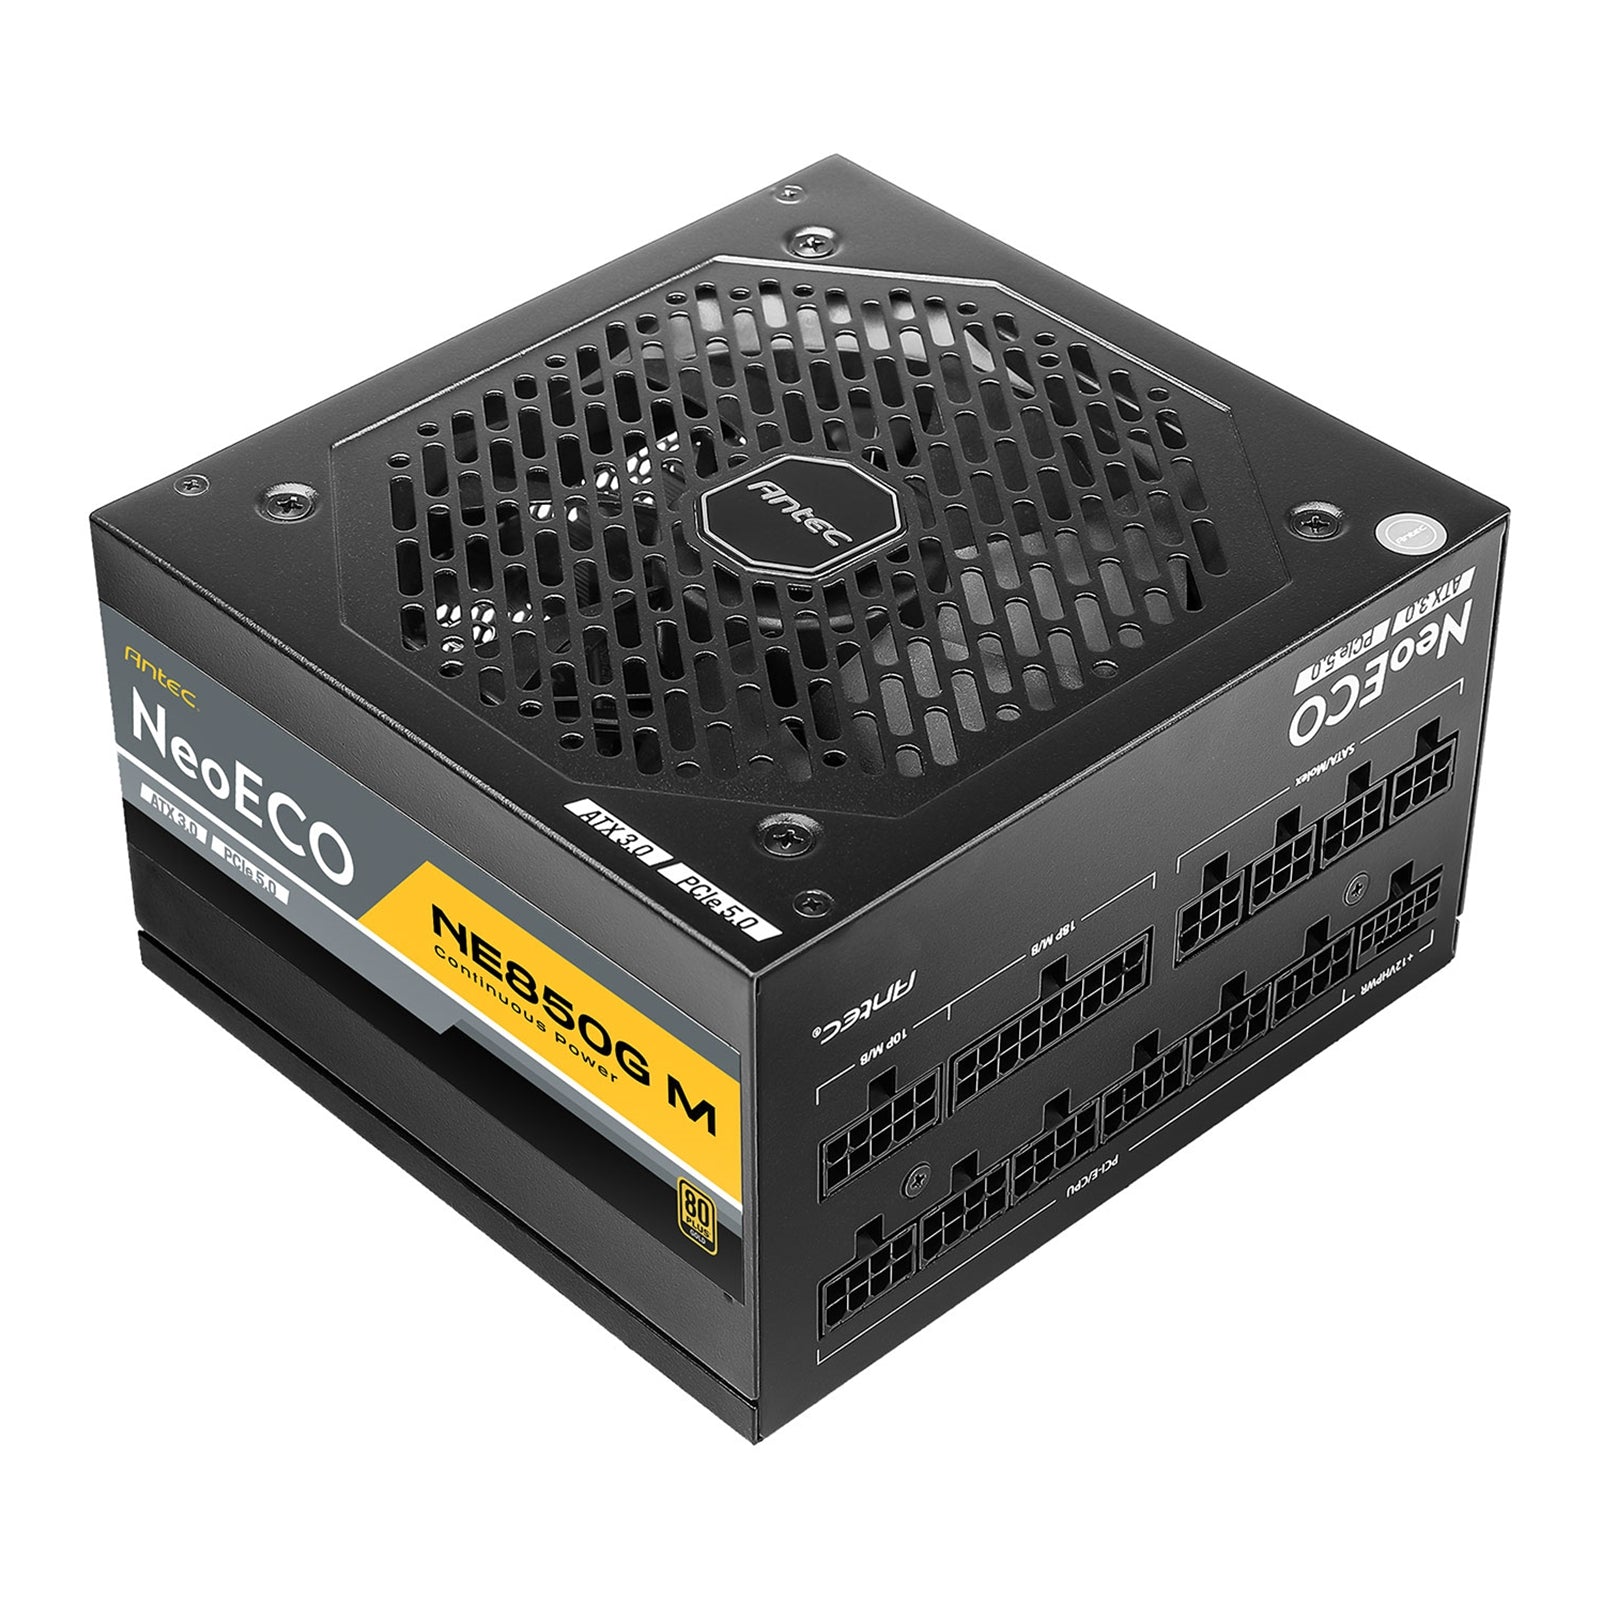 Antec NE850G M - 850W ATX 3.0 PSU - PCIe 5.0 Ready, Fully Modular, 120mm FDB Fan